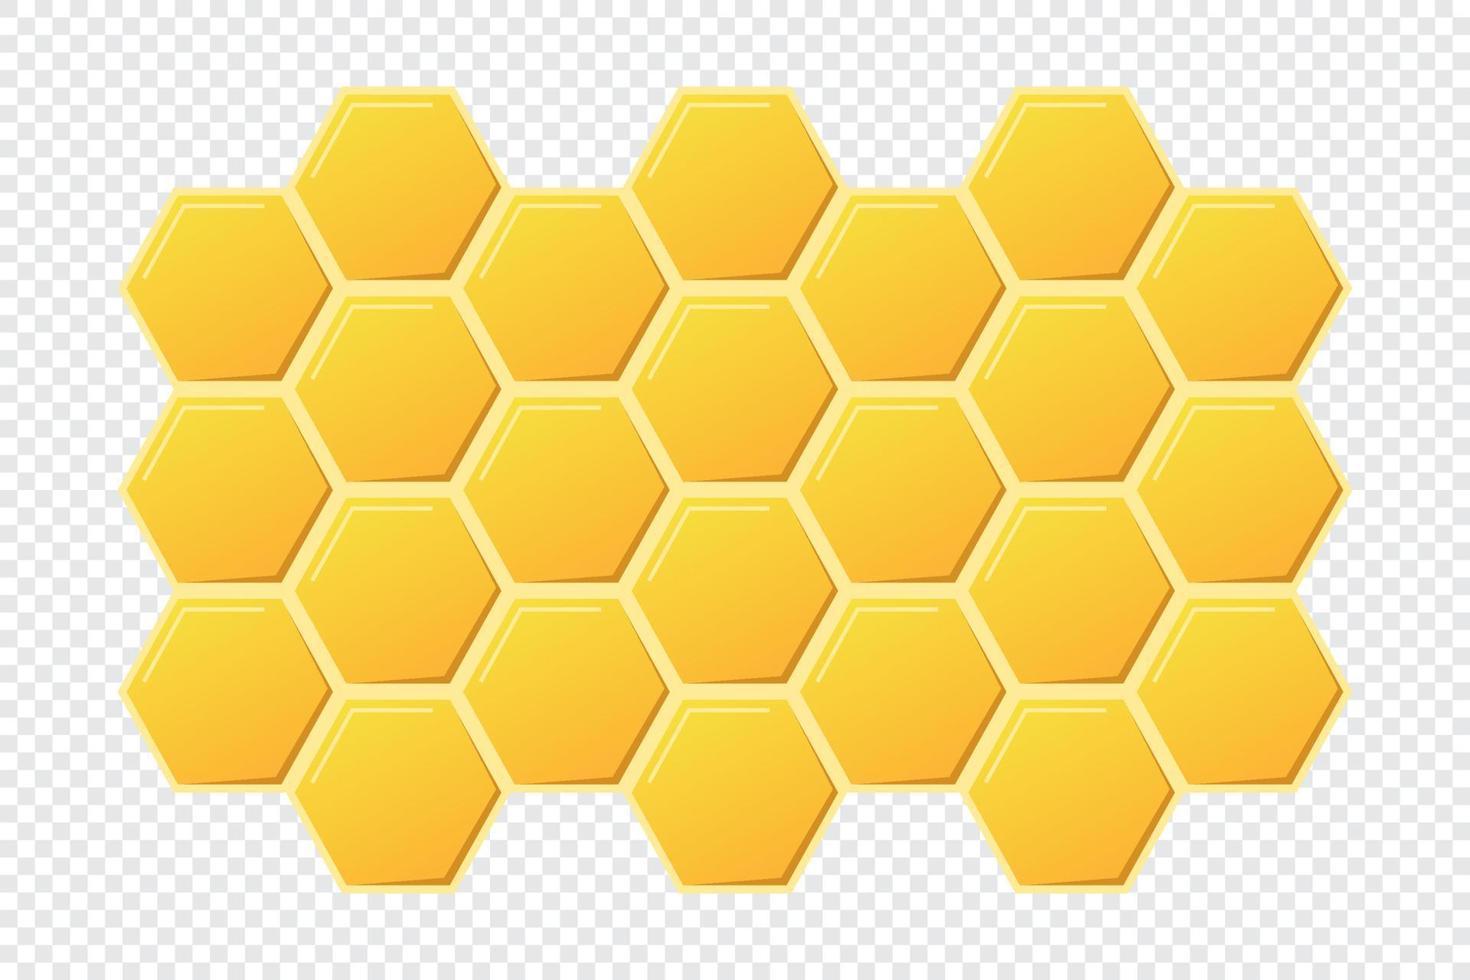 abstrakt bikakor design. guld honung hexagonal celler textur. geometrisk bikupa hexagonal honungskakor. vektor illustration